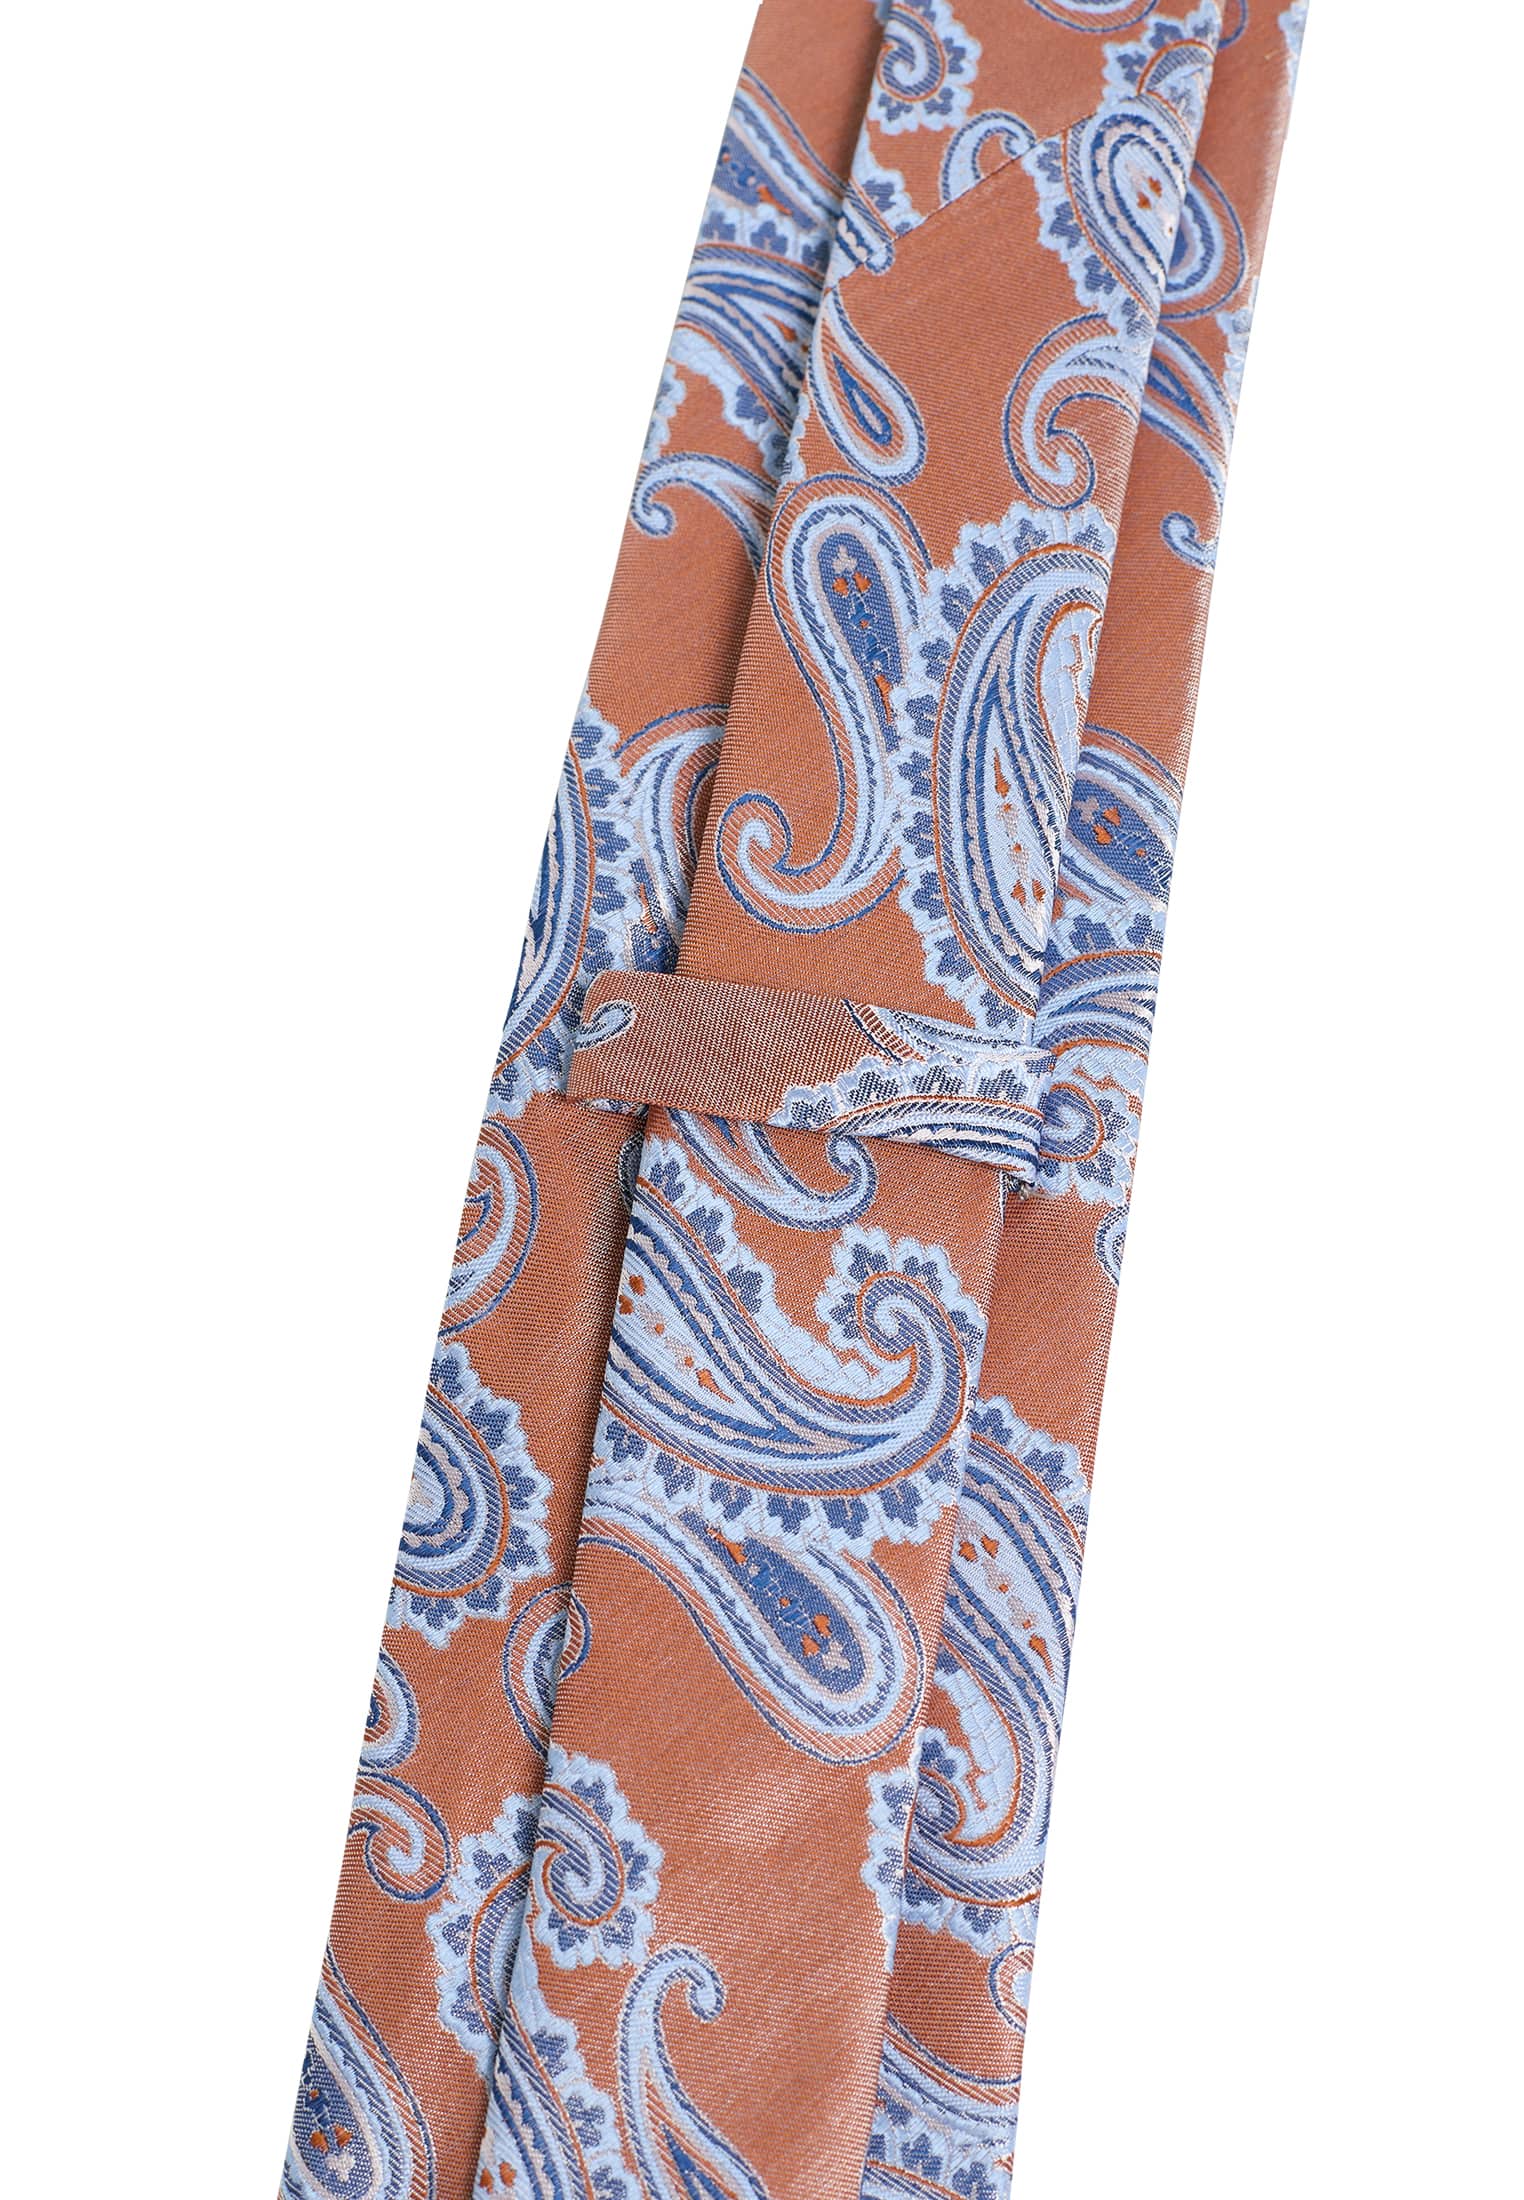 Krawatte in kupfer gemustert | 142 | 1AC01967-97-72-142 | kupfer